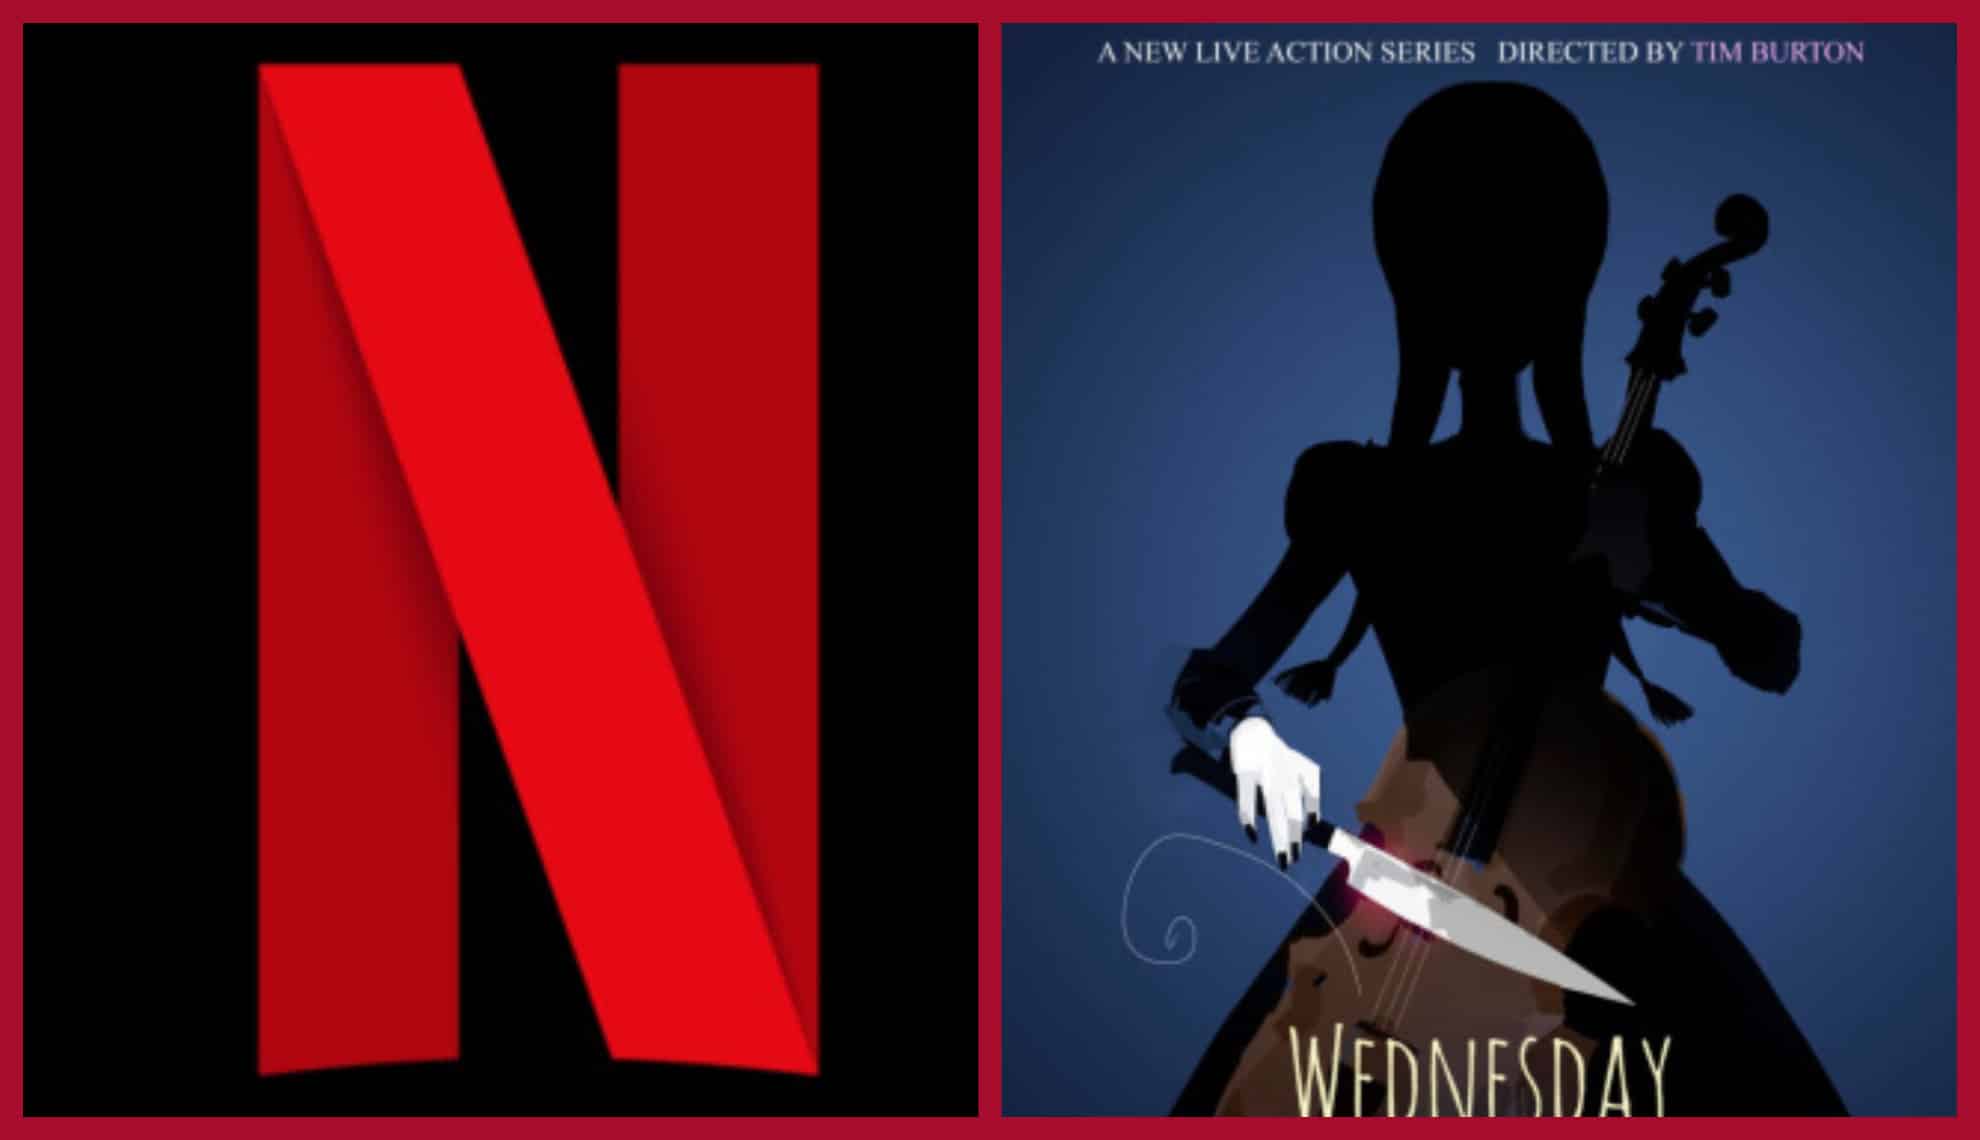 La Famiglia Addams: Tim Burton dirige la serie Netflix su Mercoledì!